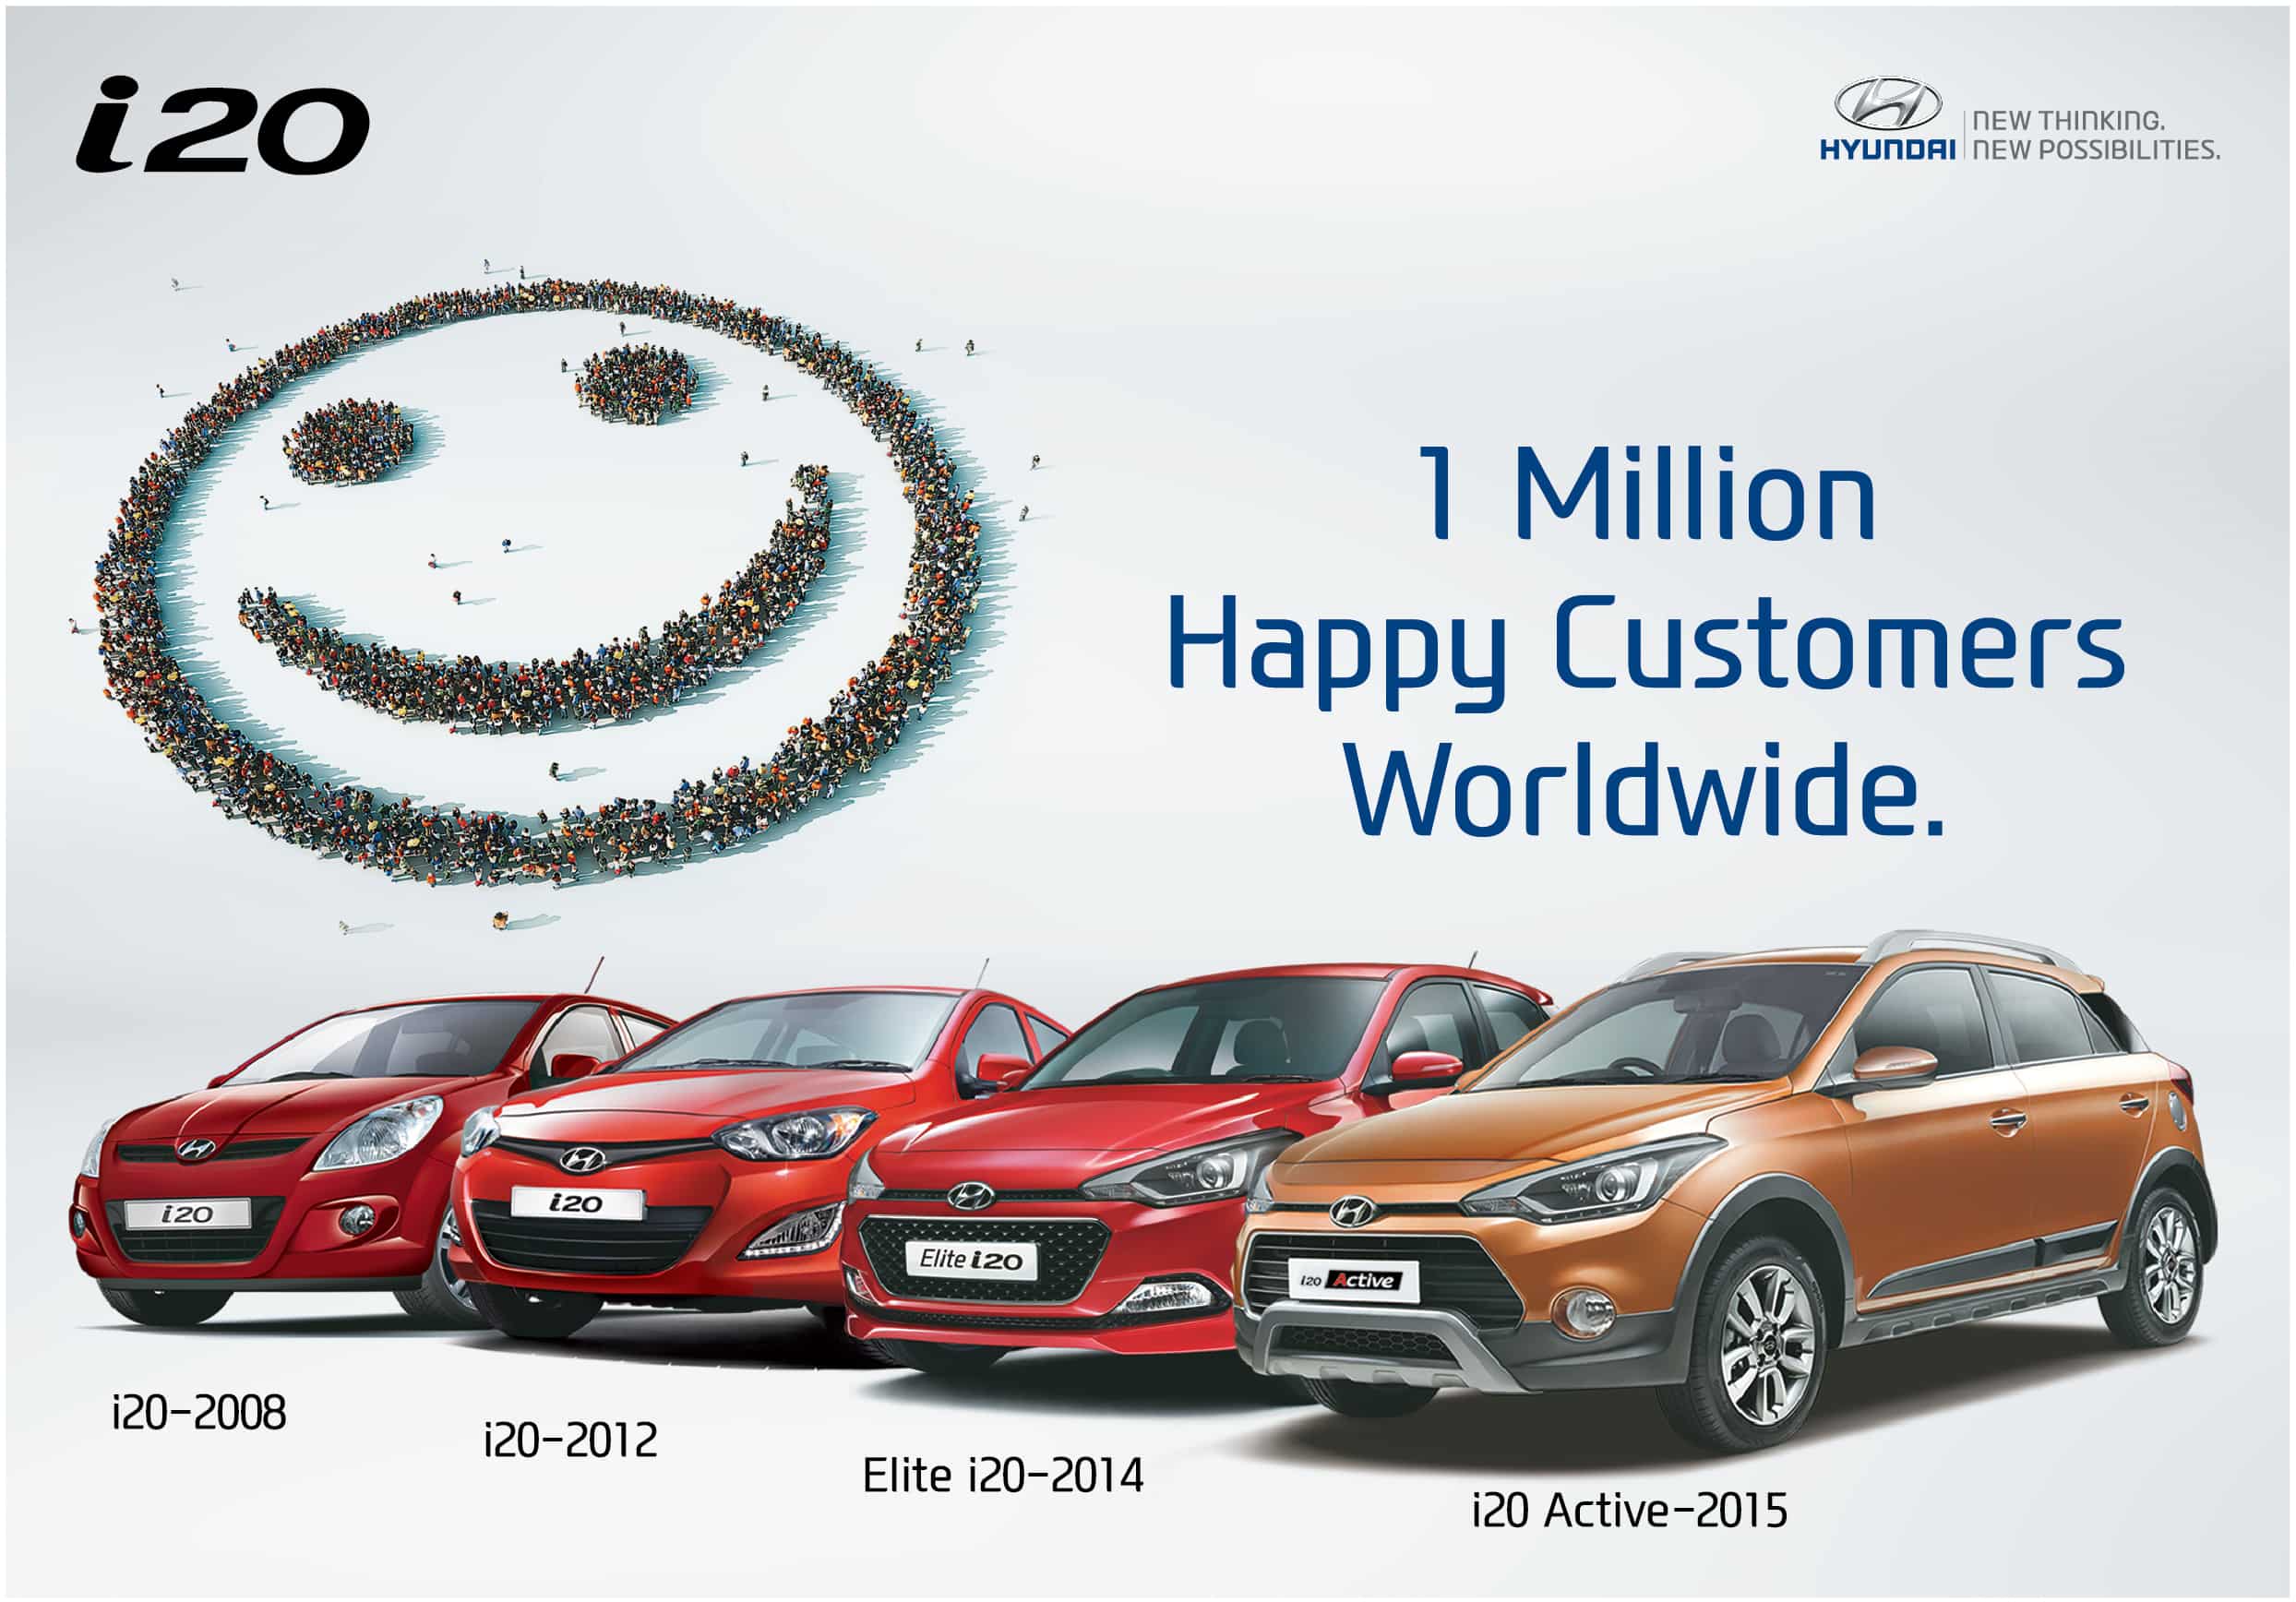 Hyundai i20 model sales cross 10-lakh units mark